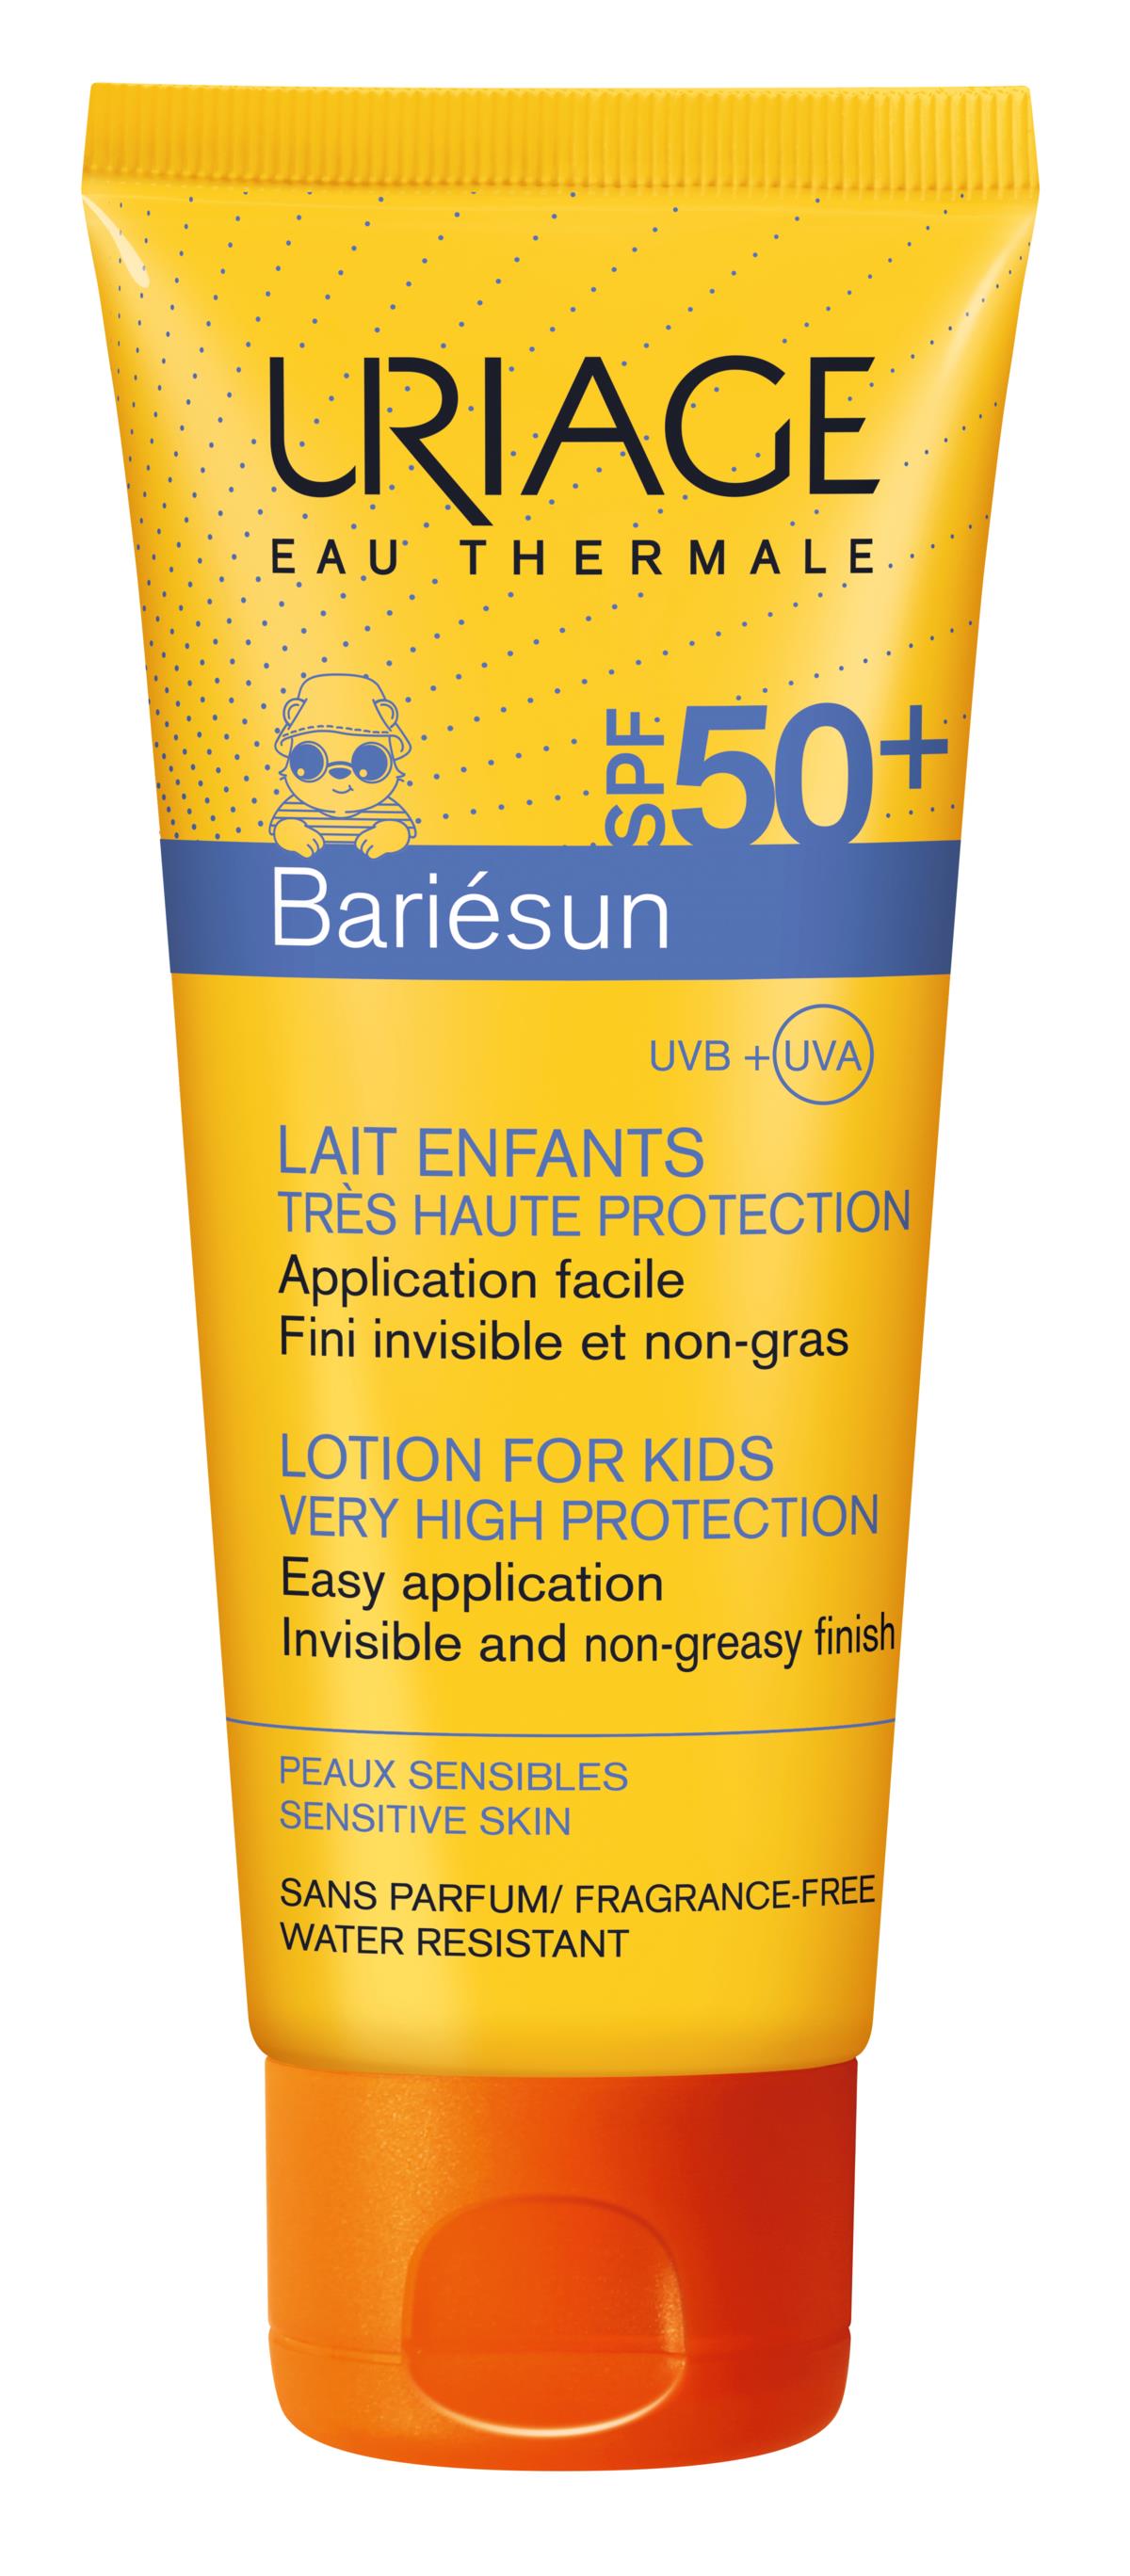 Bariésun Spray Enfant Hydratant SPF50+